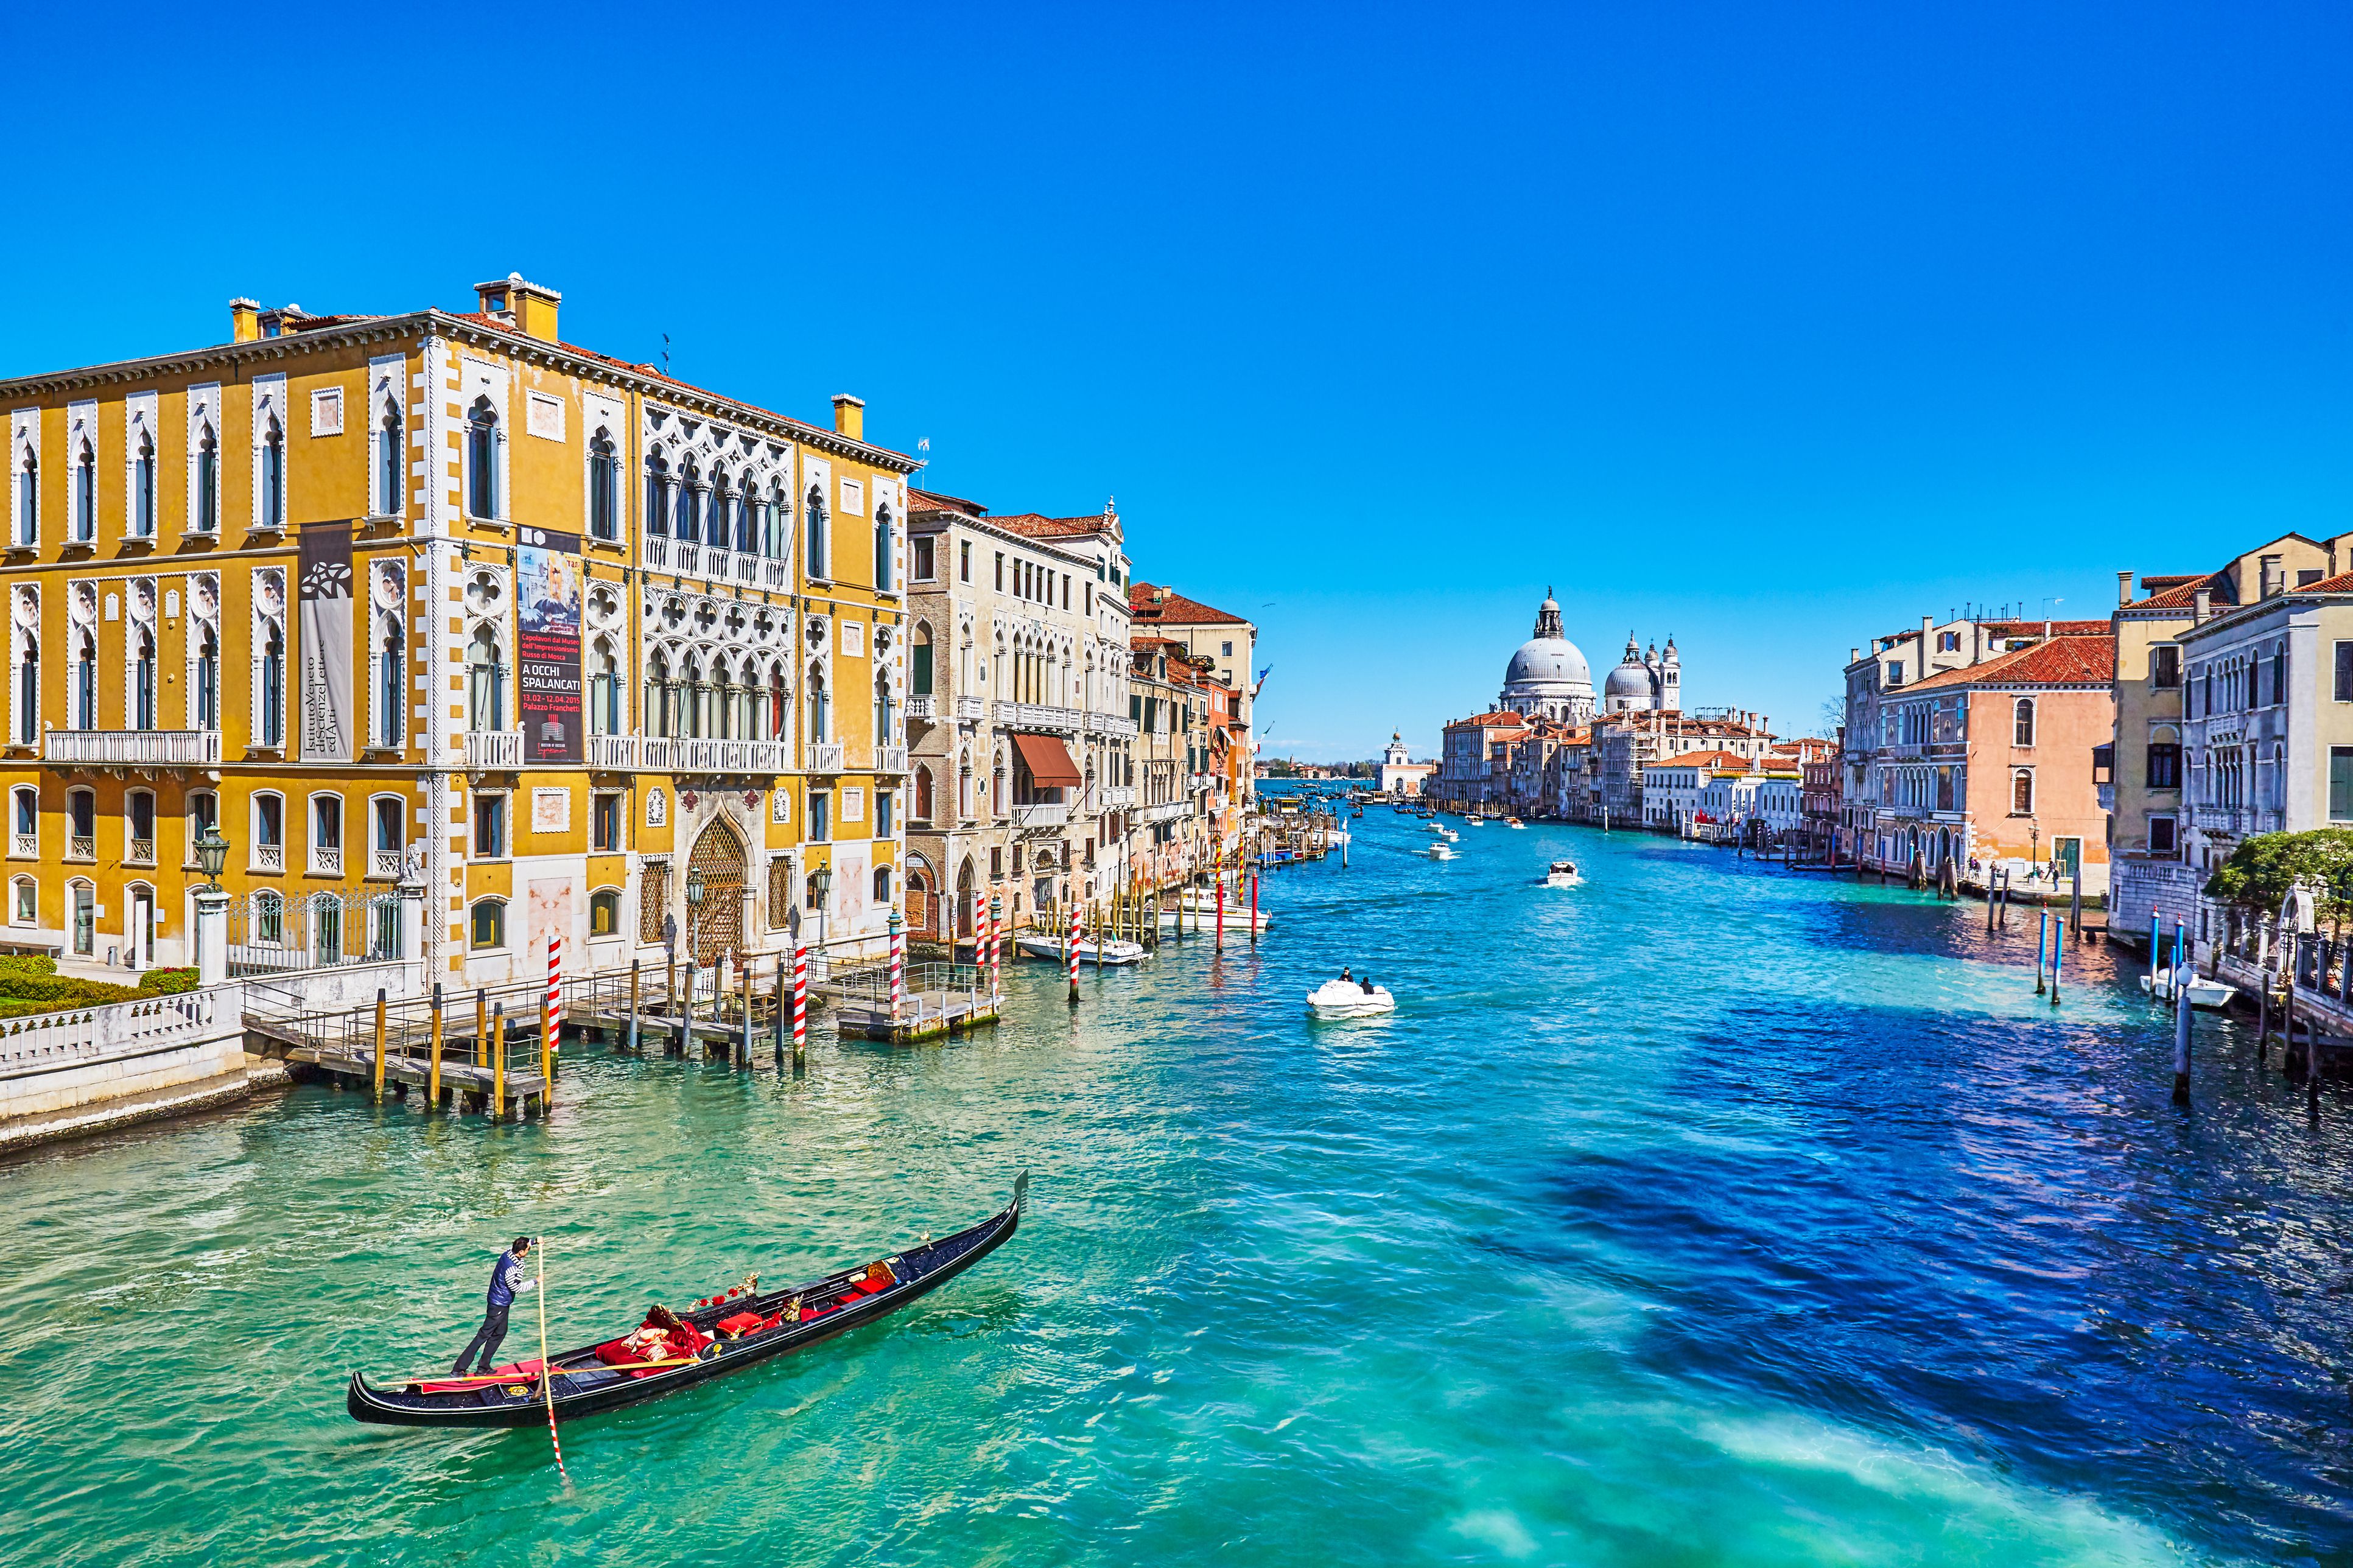 The Grand Canal of Venice, Italy бесплатно